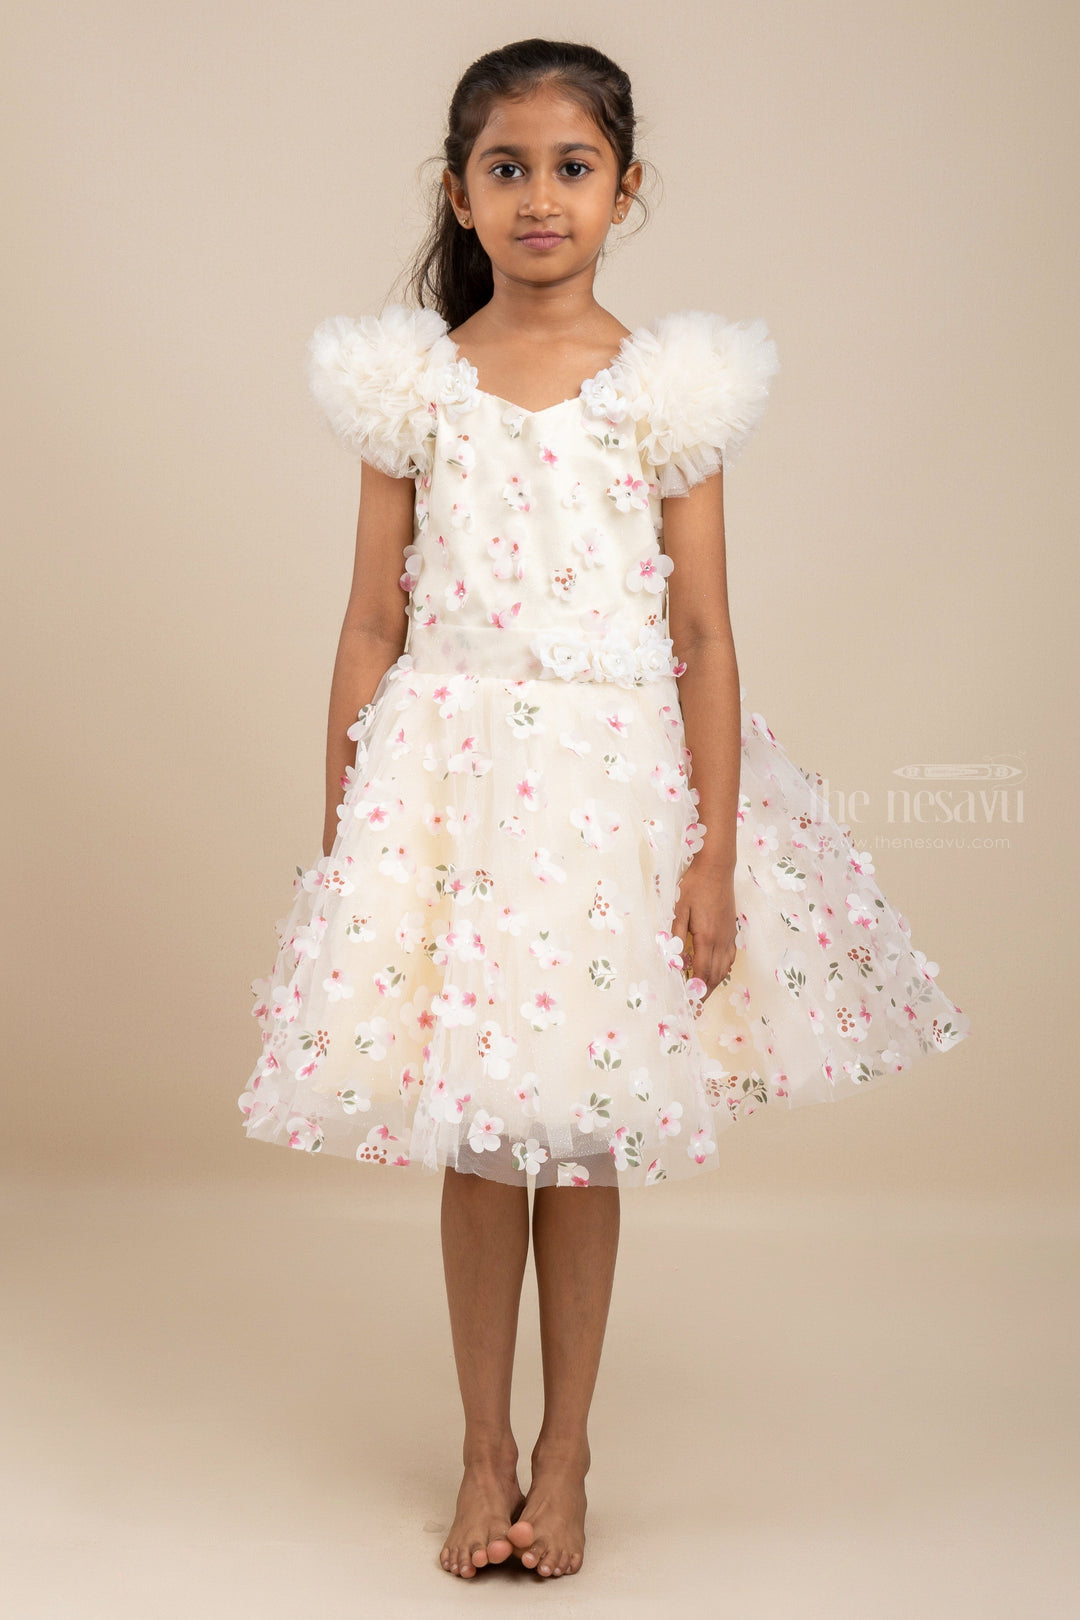 The Nesavu Party Frock Off White Floral Designer Tutu Frock For Baby Girls psr silks Nesavu 16 (1Y) / Beige PF94C